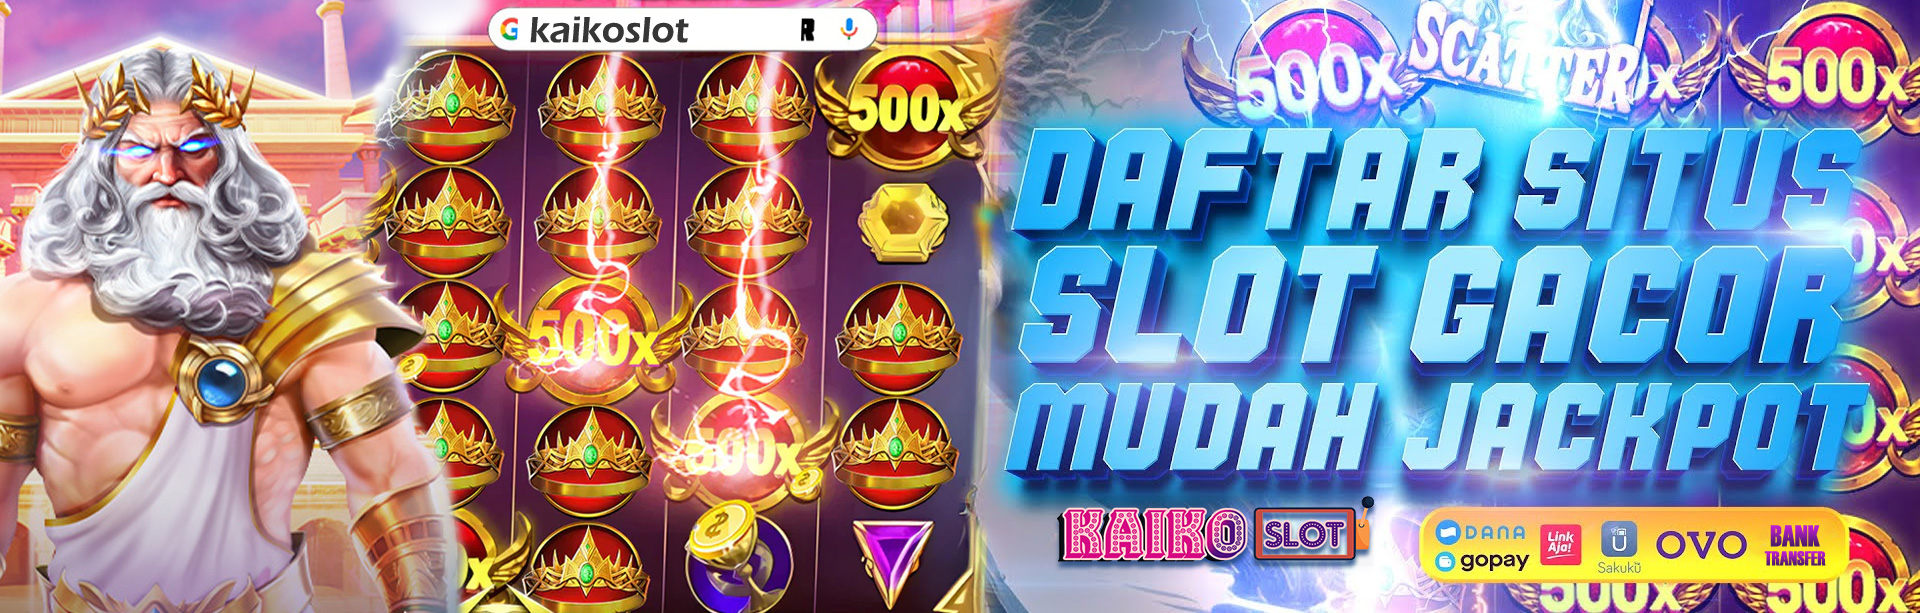 Slot Mudah Jackpot Kaikoslot